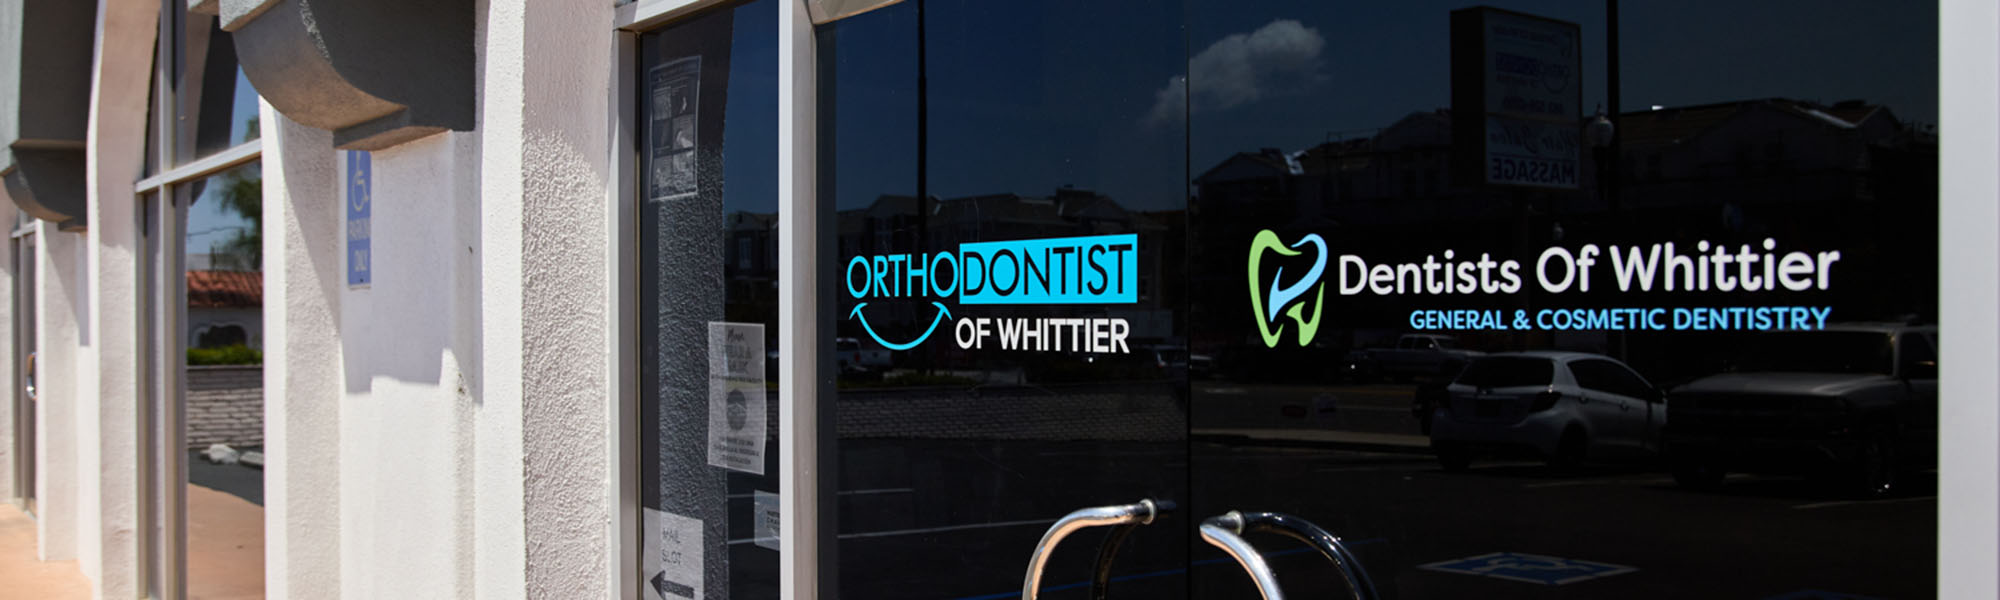 Contact Orthodontics of Whittier